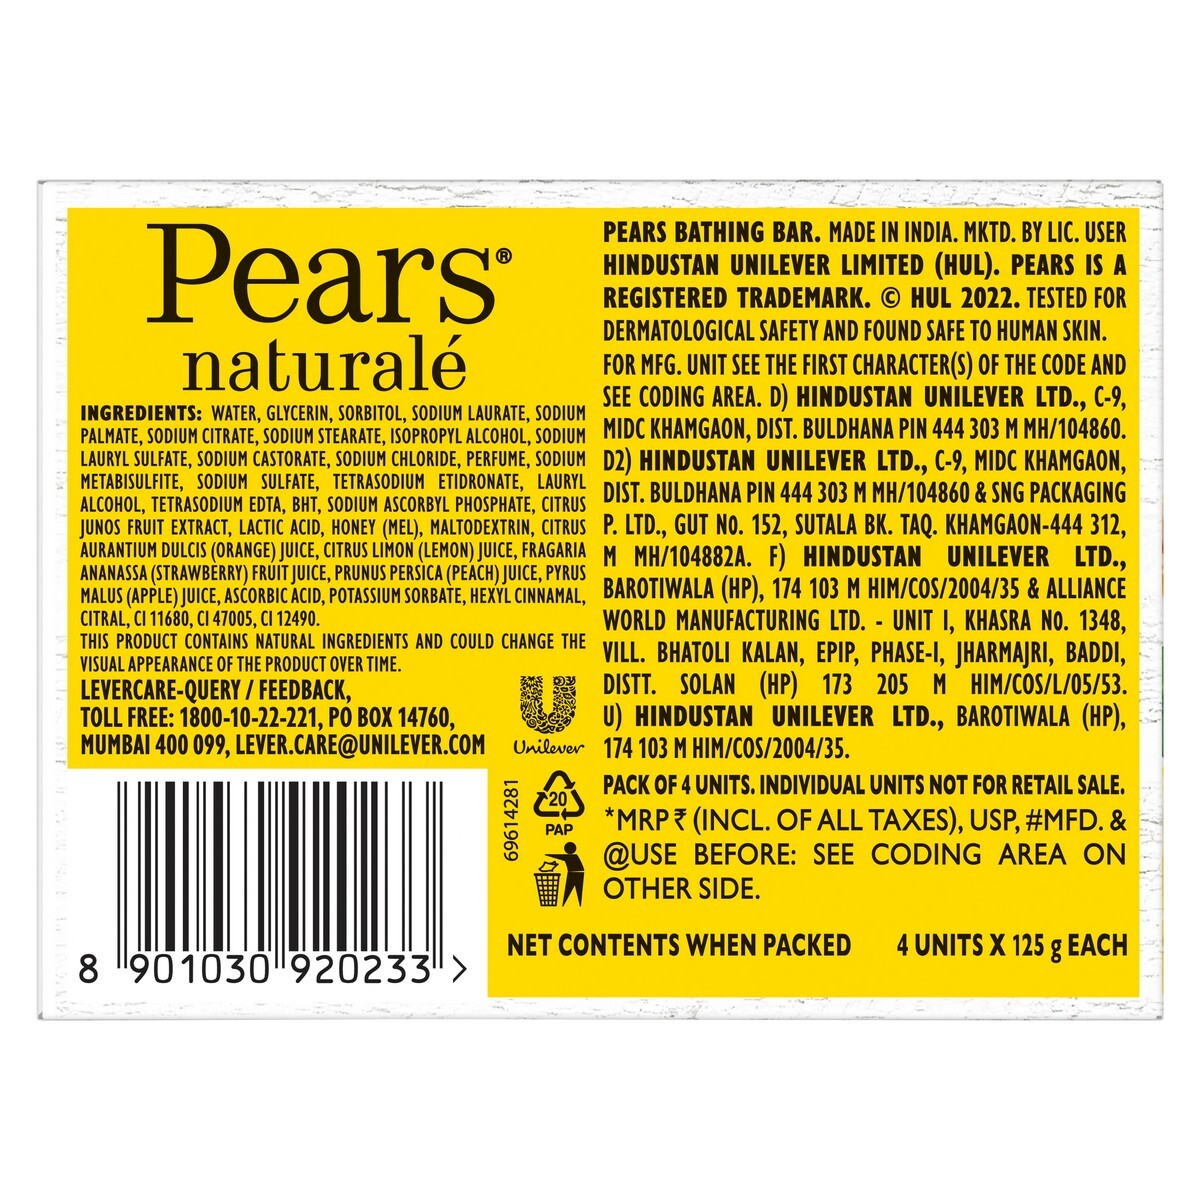 Pears Naturale Vitamin C Refreshing Bathing Bar, 125 G (Pack Of 4)